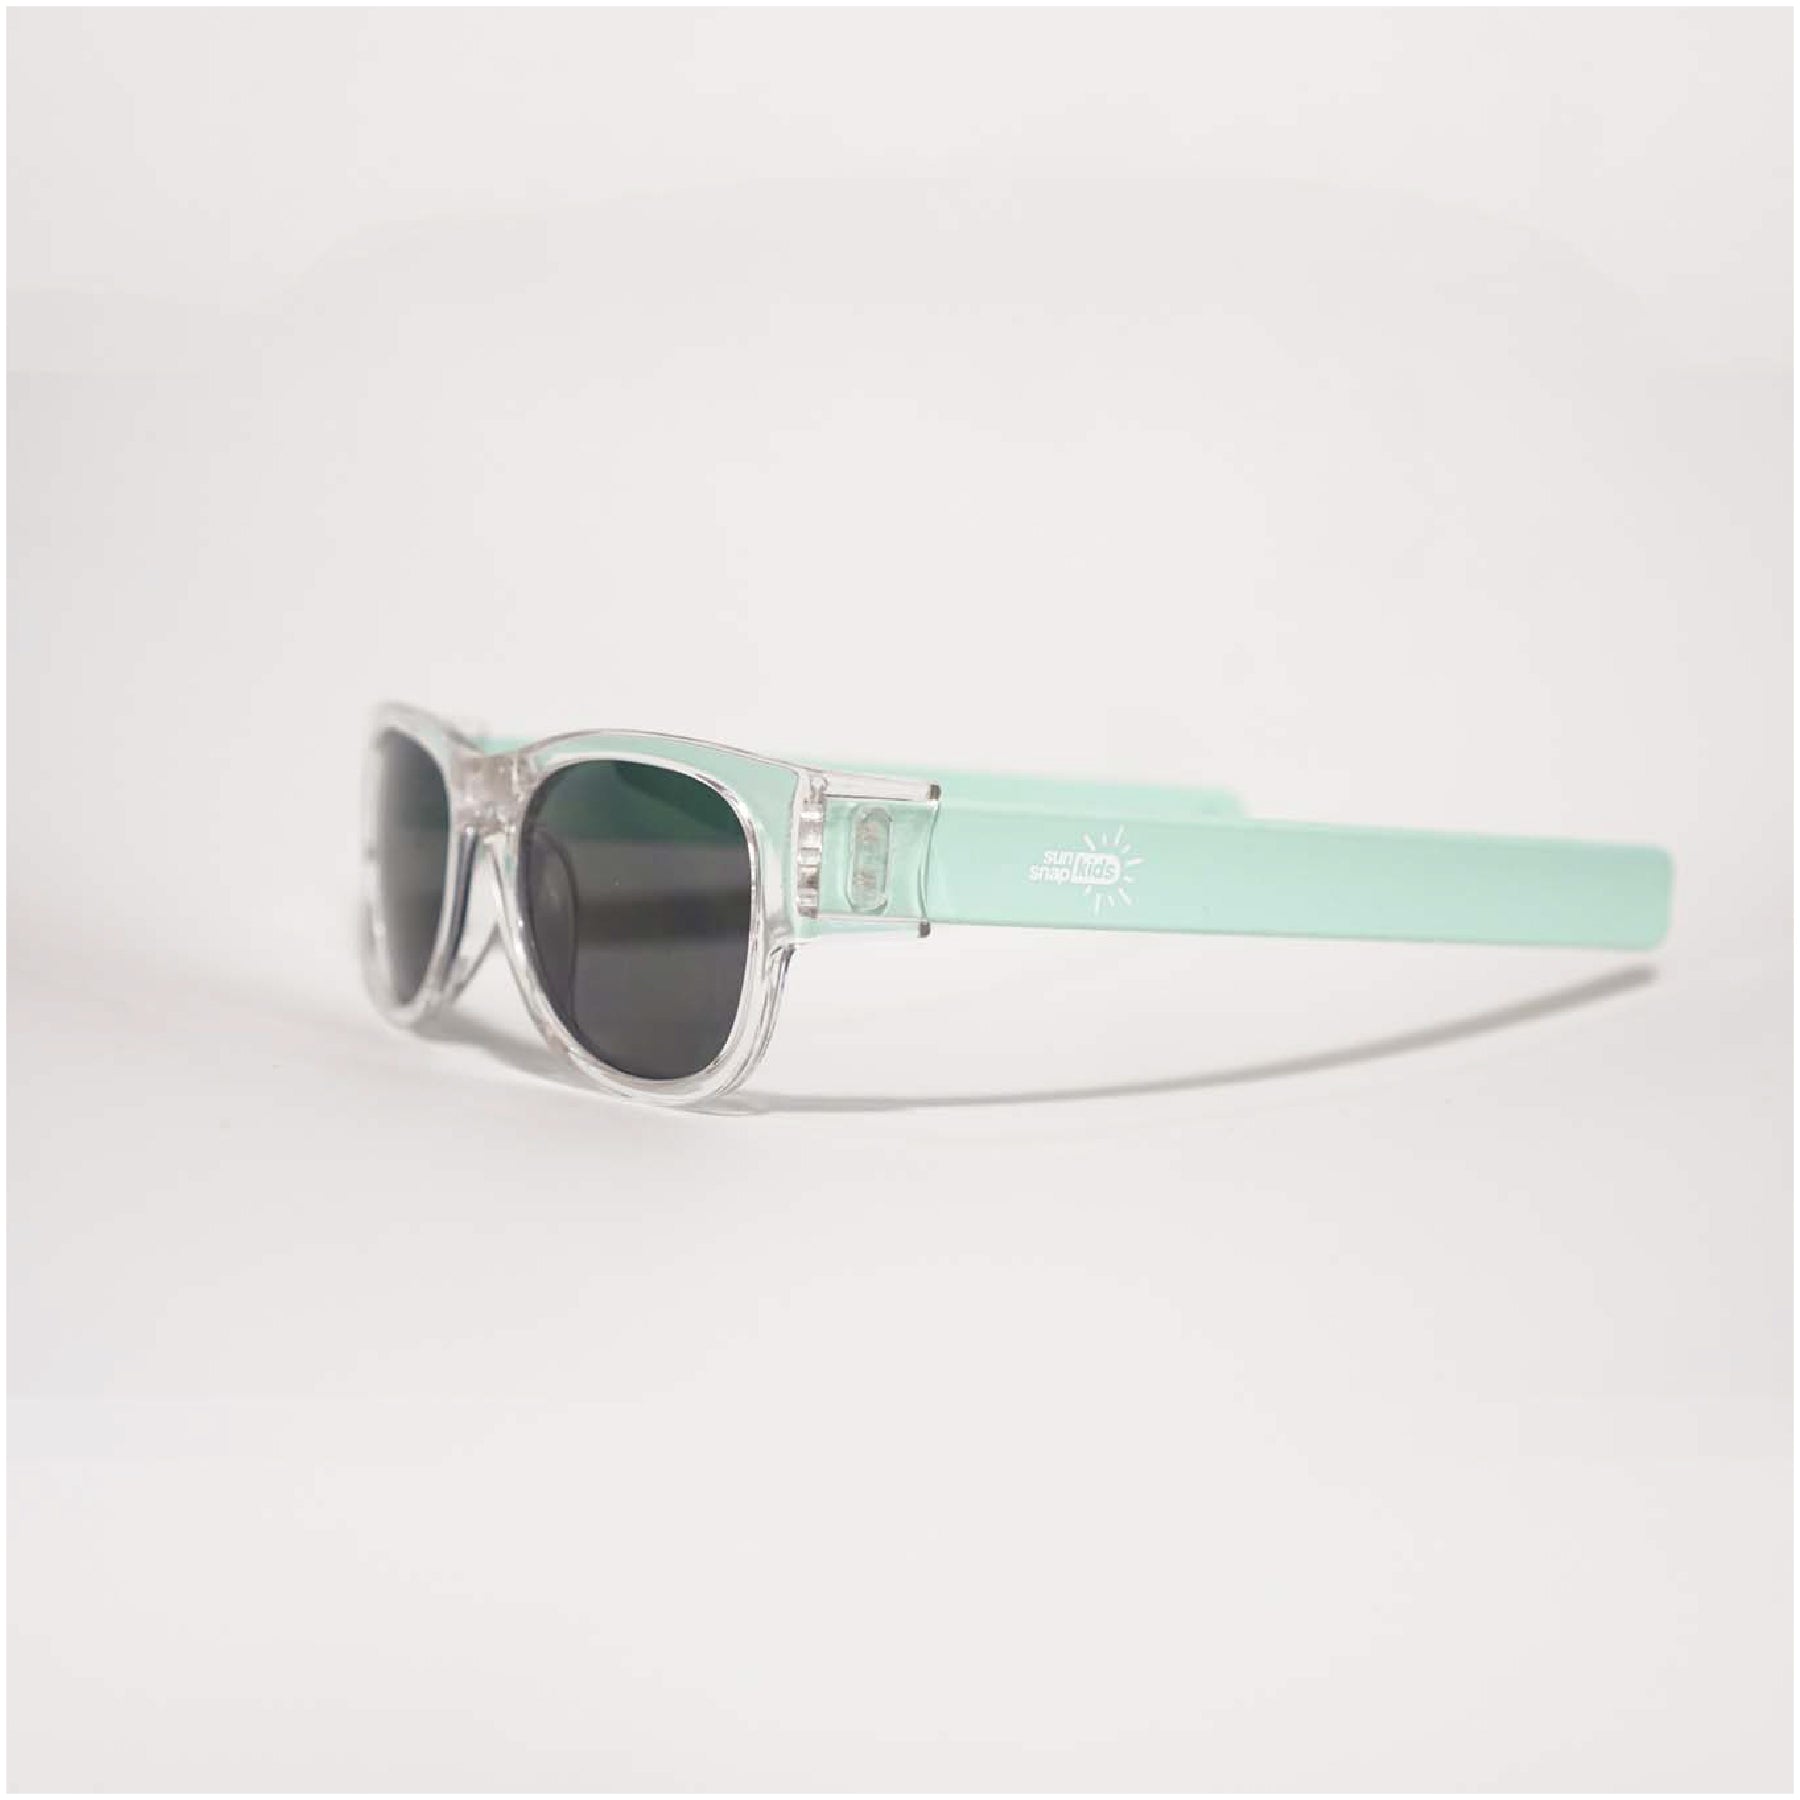 Mint Snappable Sunglasses: Original